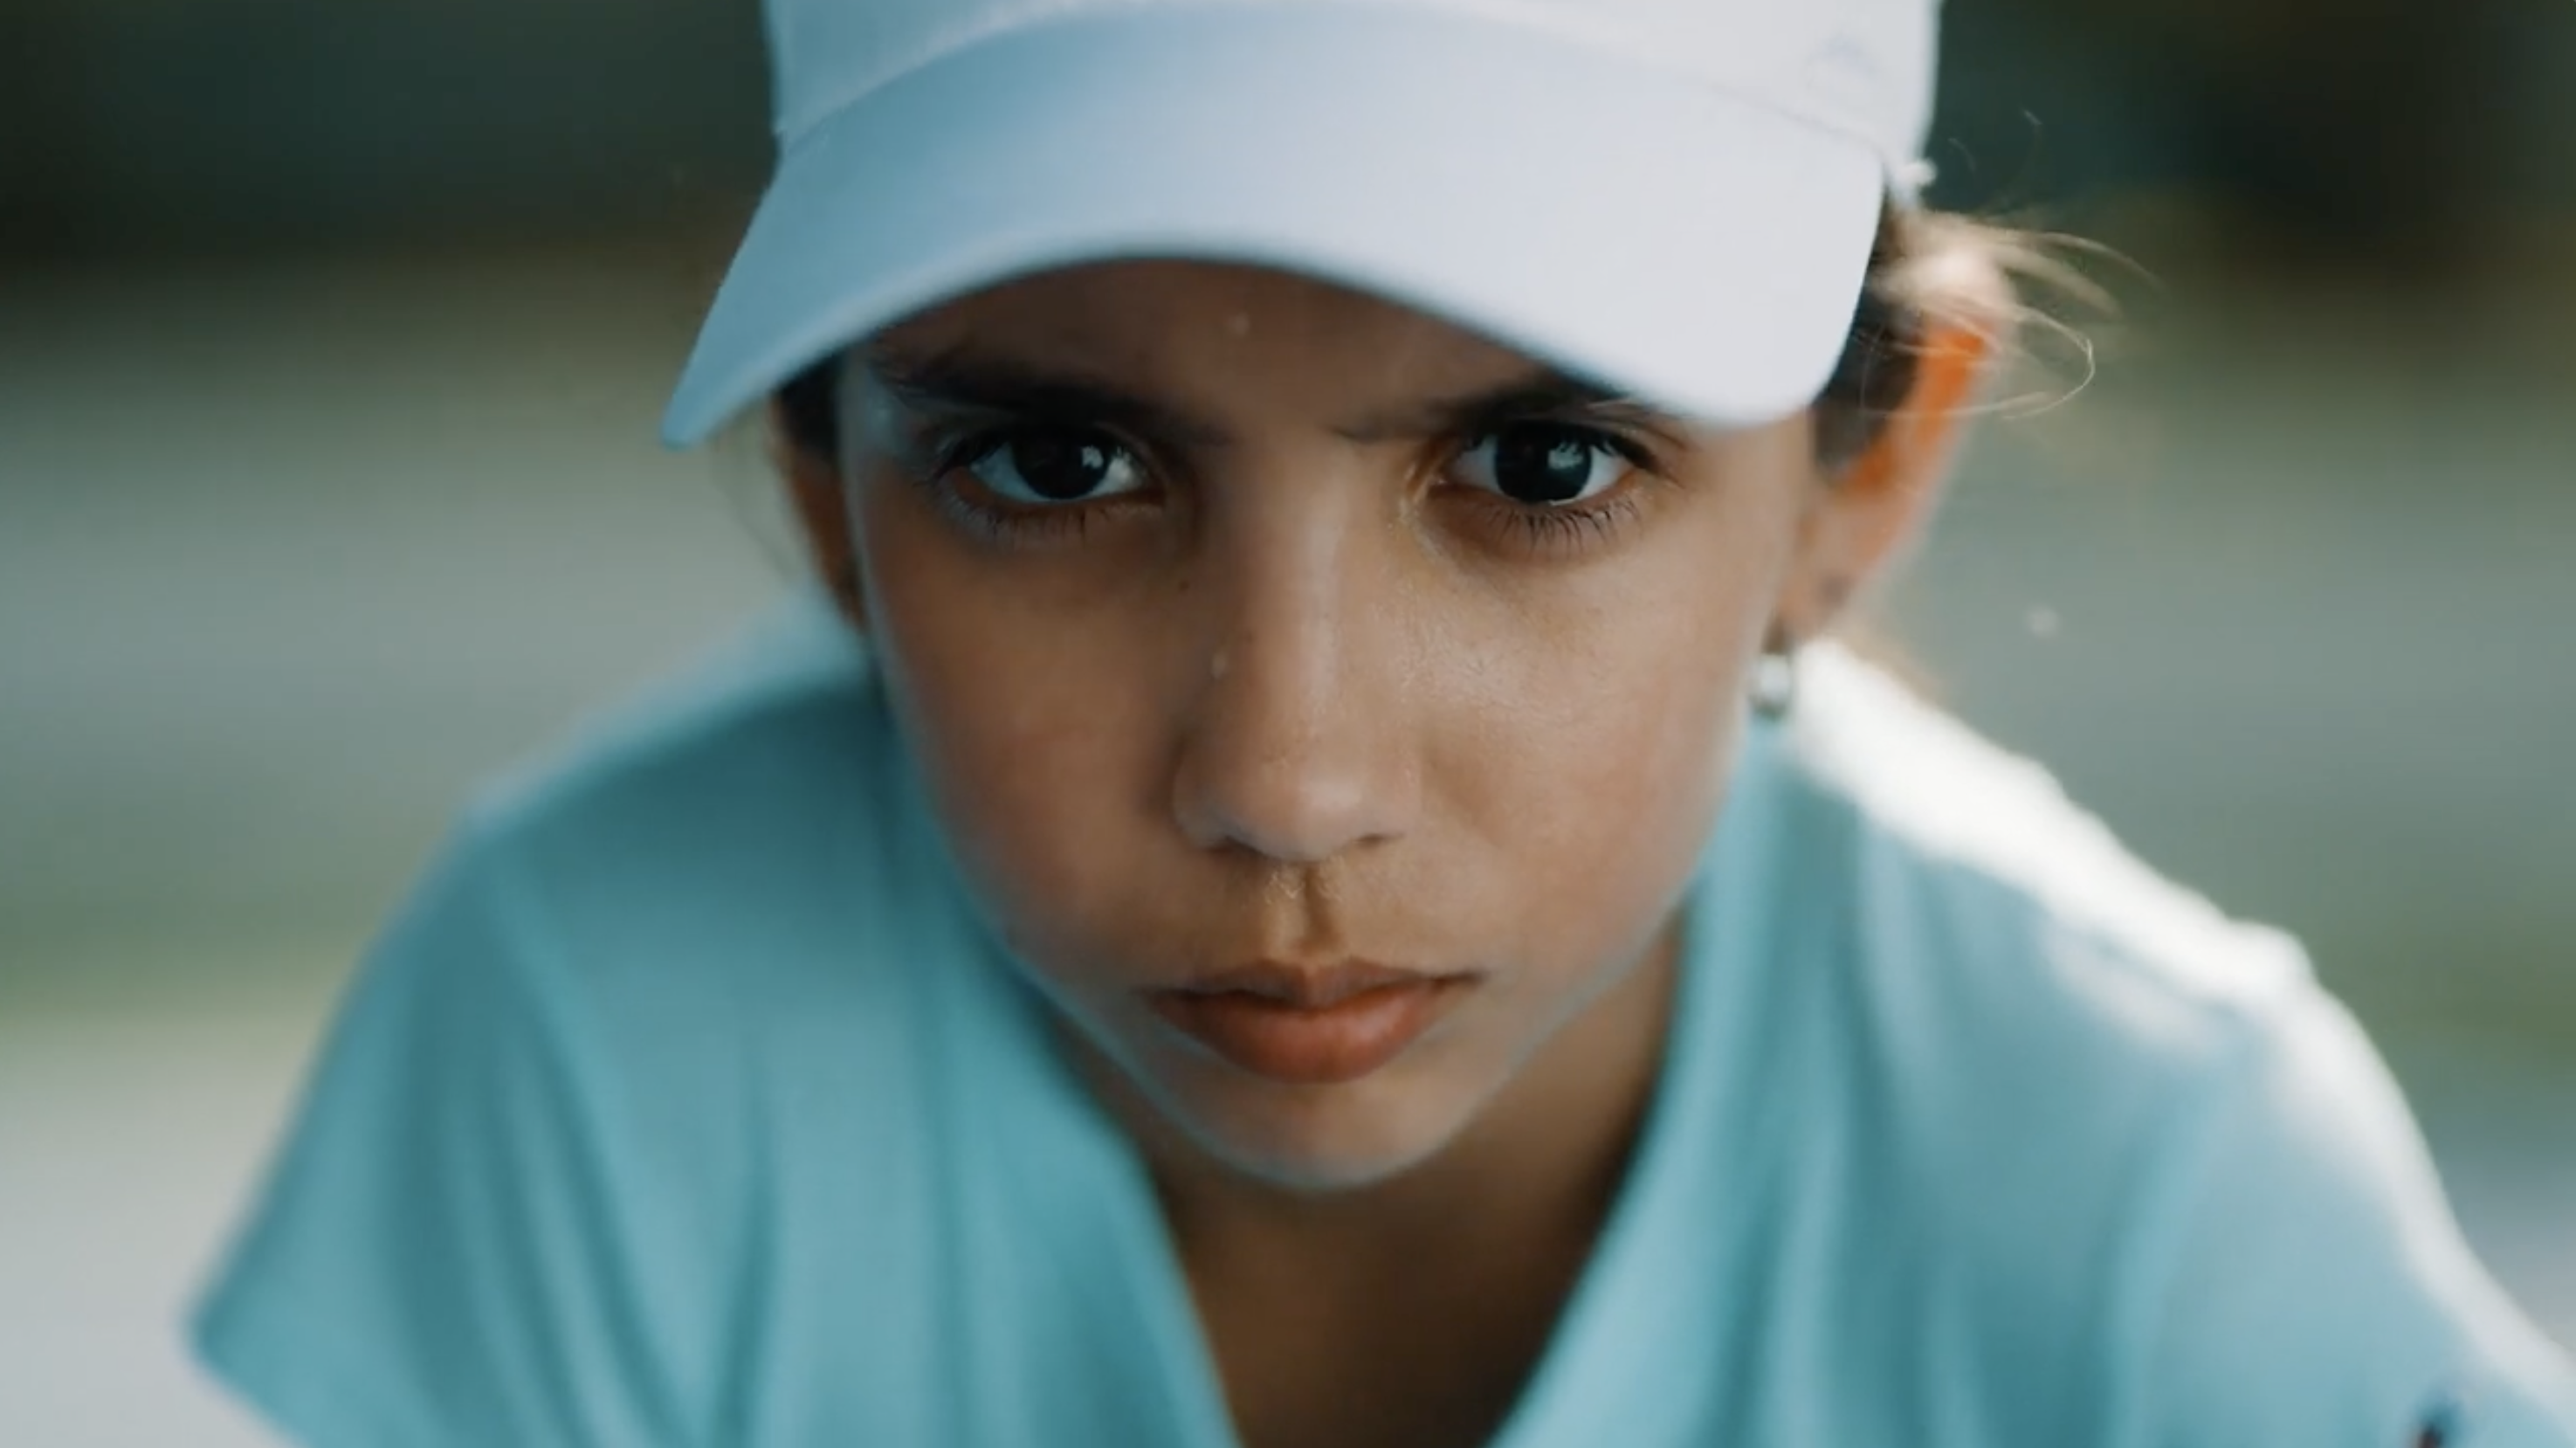 A young girl in a ball cap stares into the camera with an intense gaze